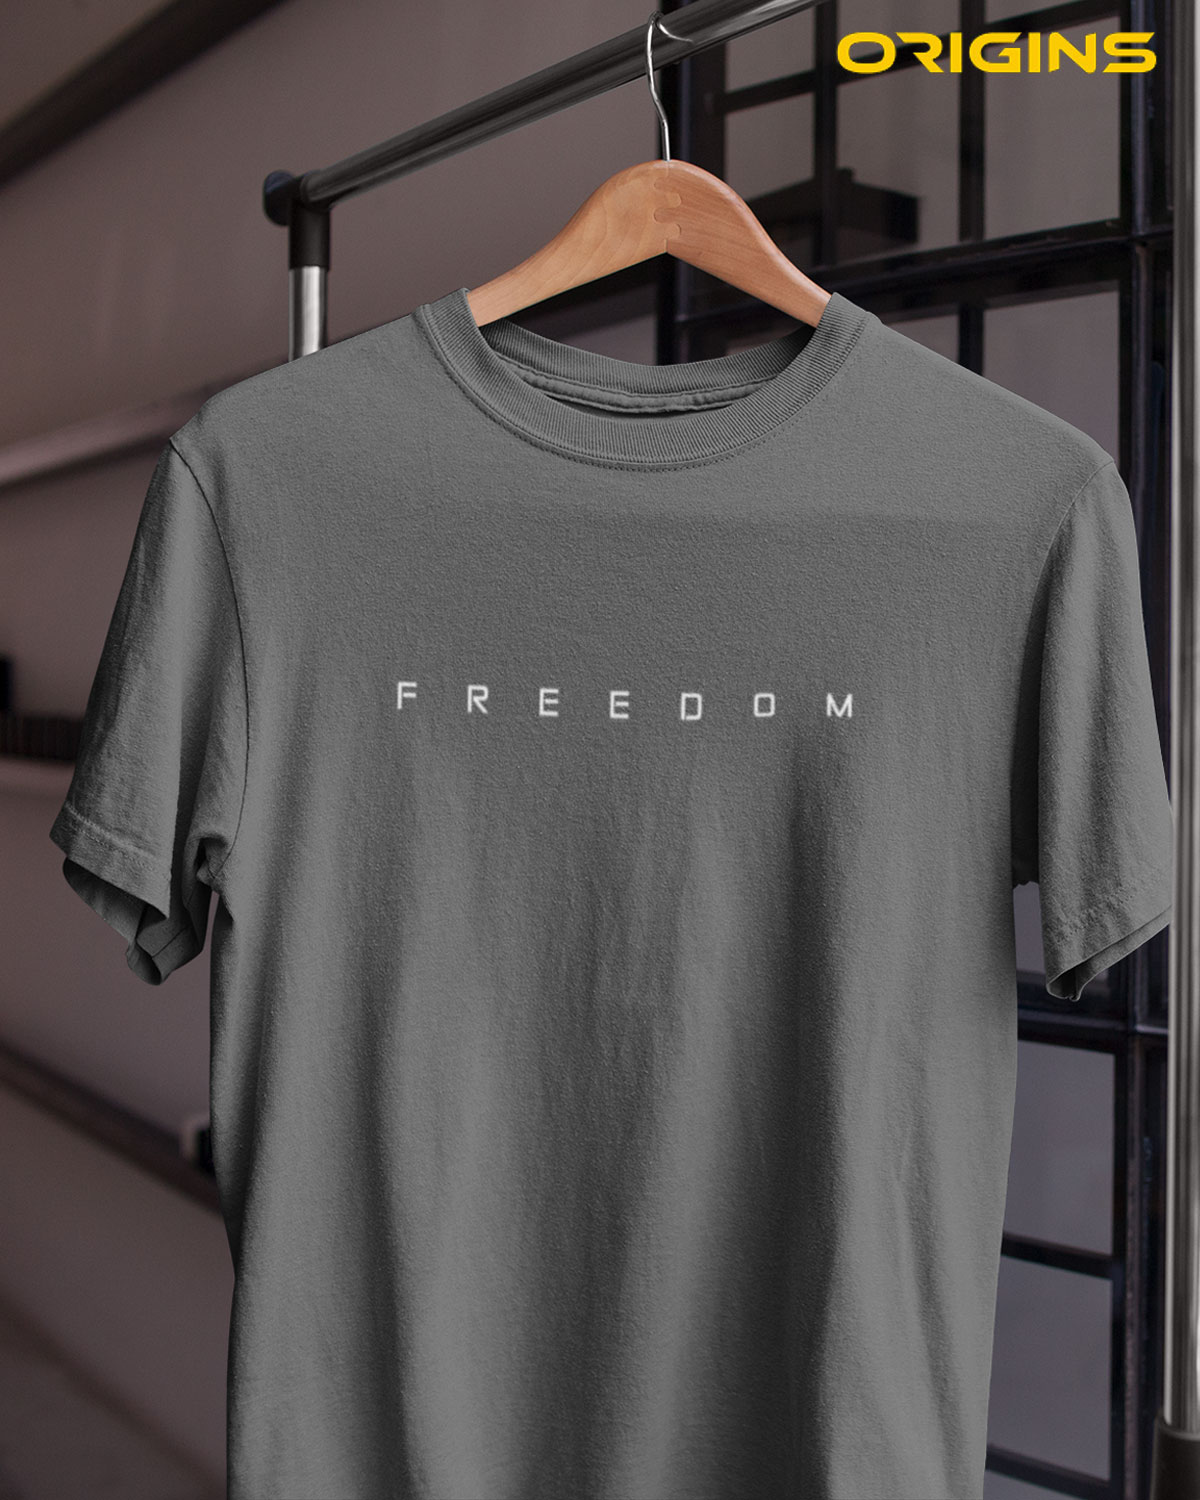 FREEDOM Charcoal Gray Cotton T-Shirt Unisex » Origins Wear | New ...